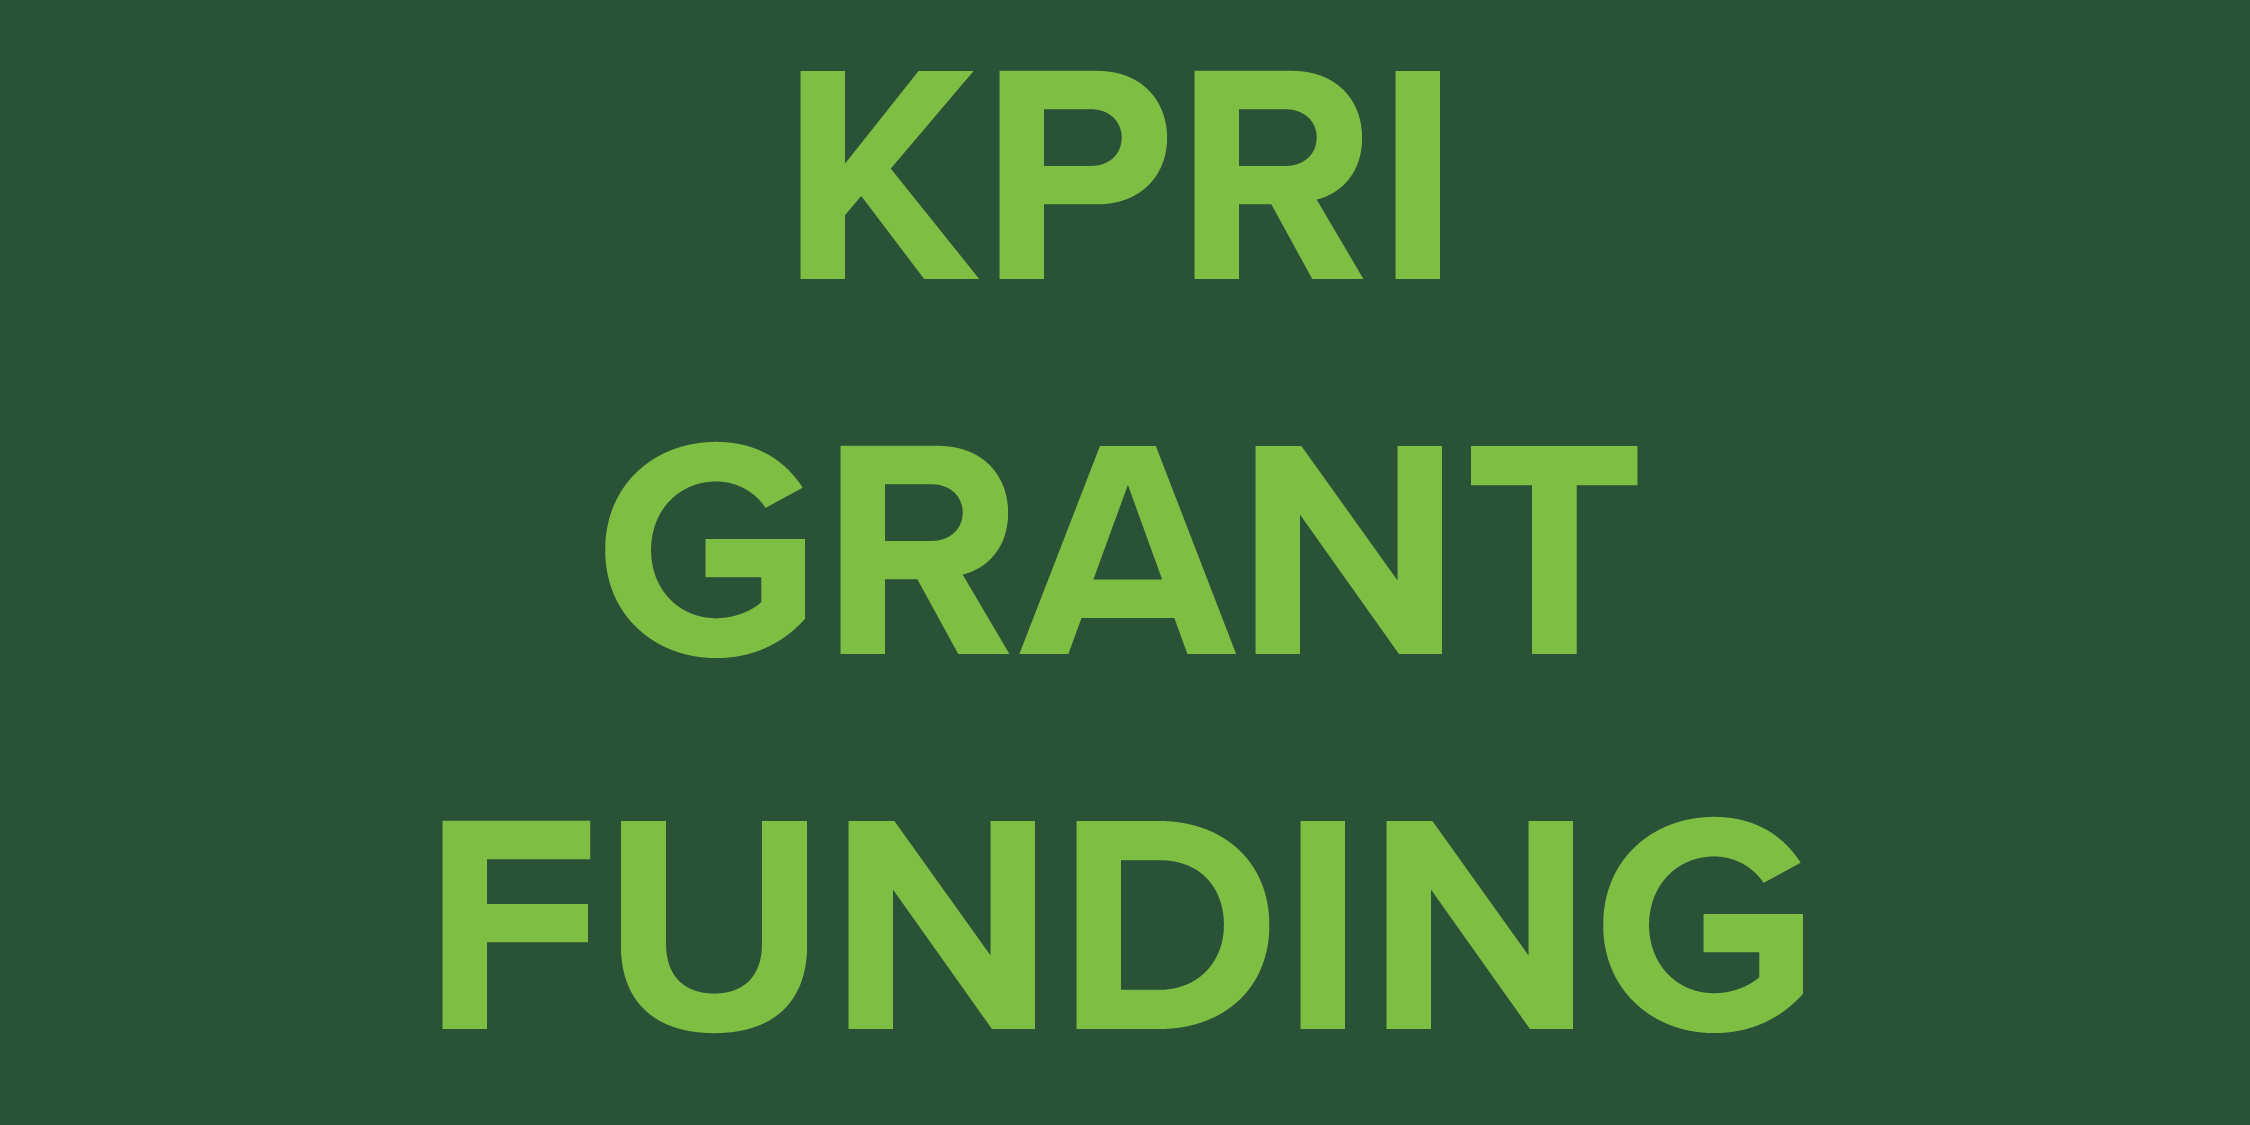 1993- First KPRI Grants Awarded